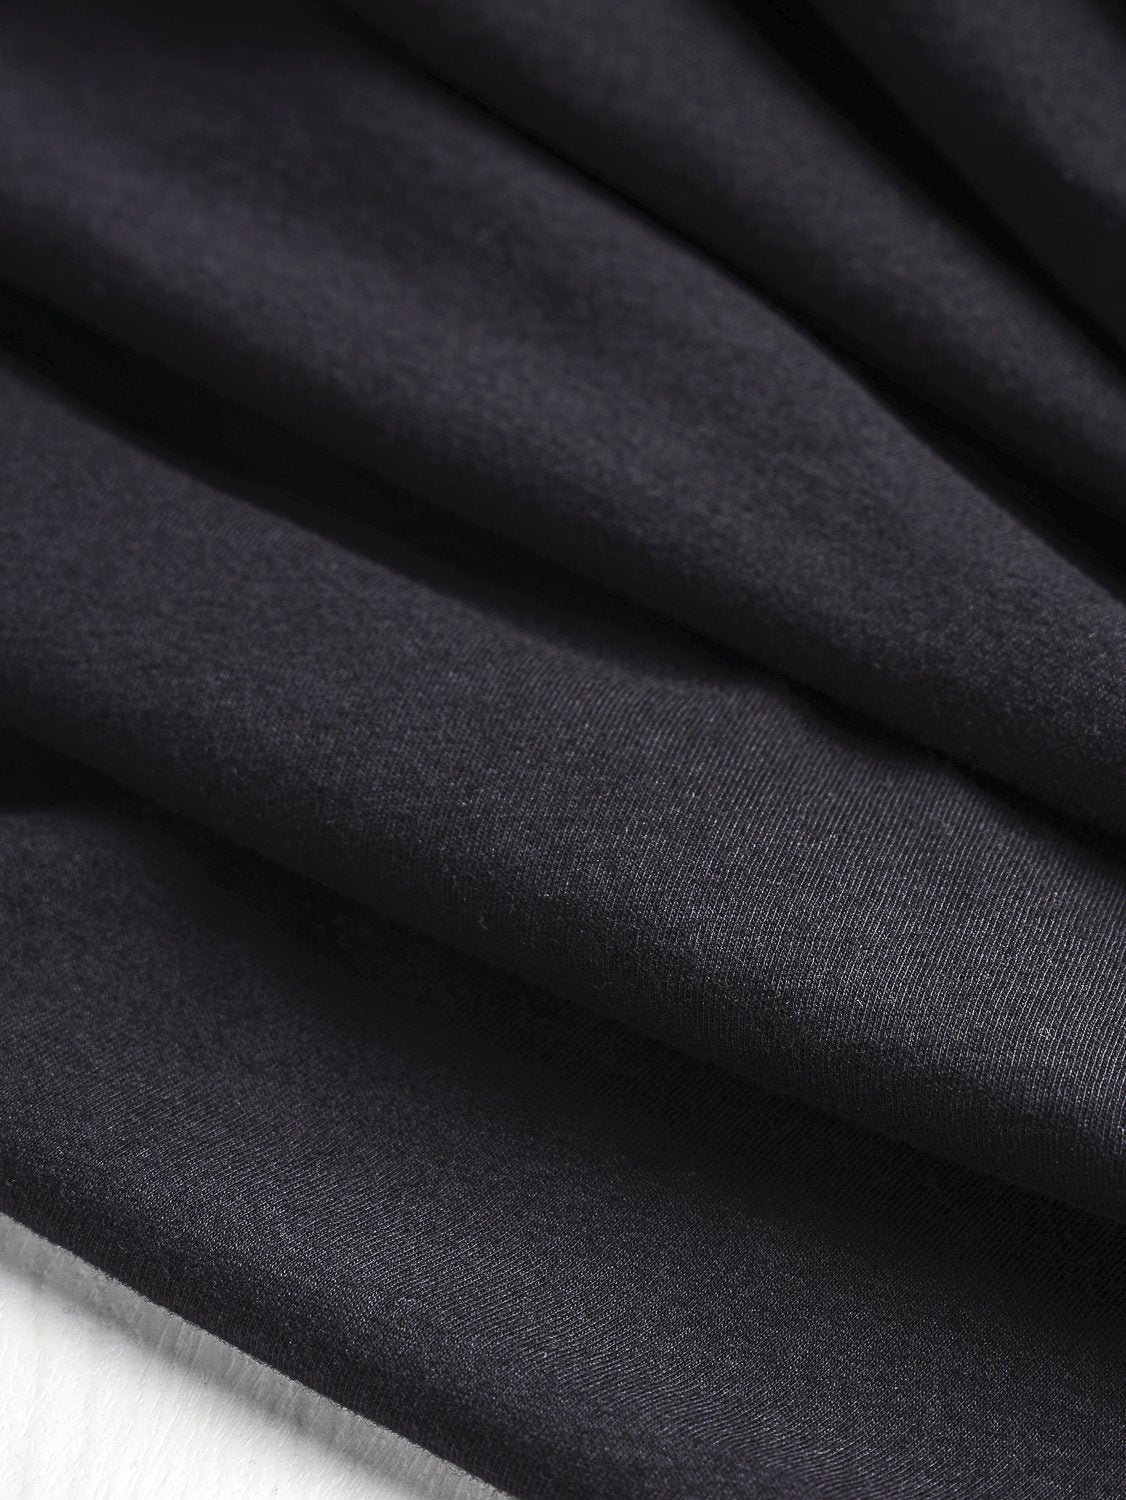 Organic Cotton Jersey Knit - Black - Swatch